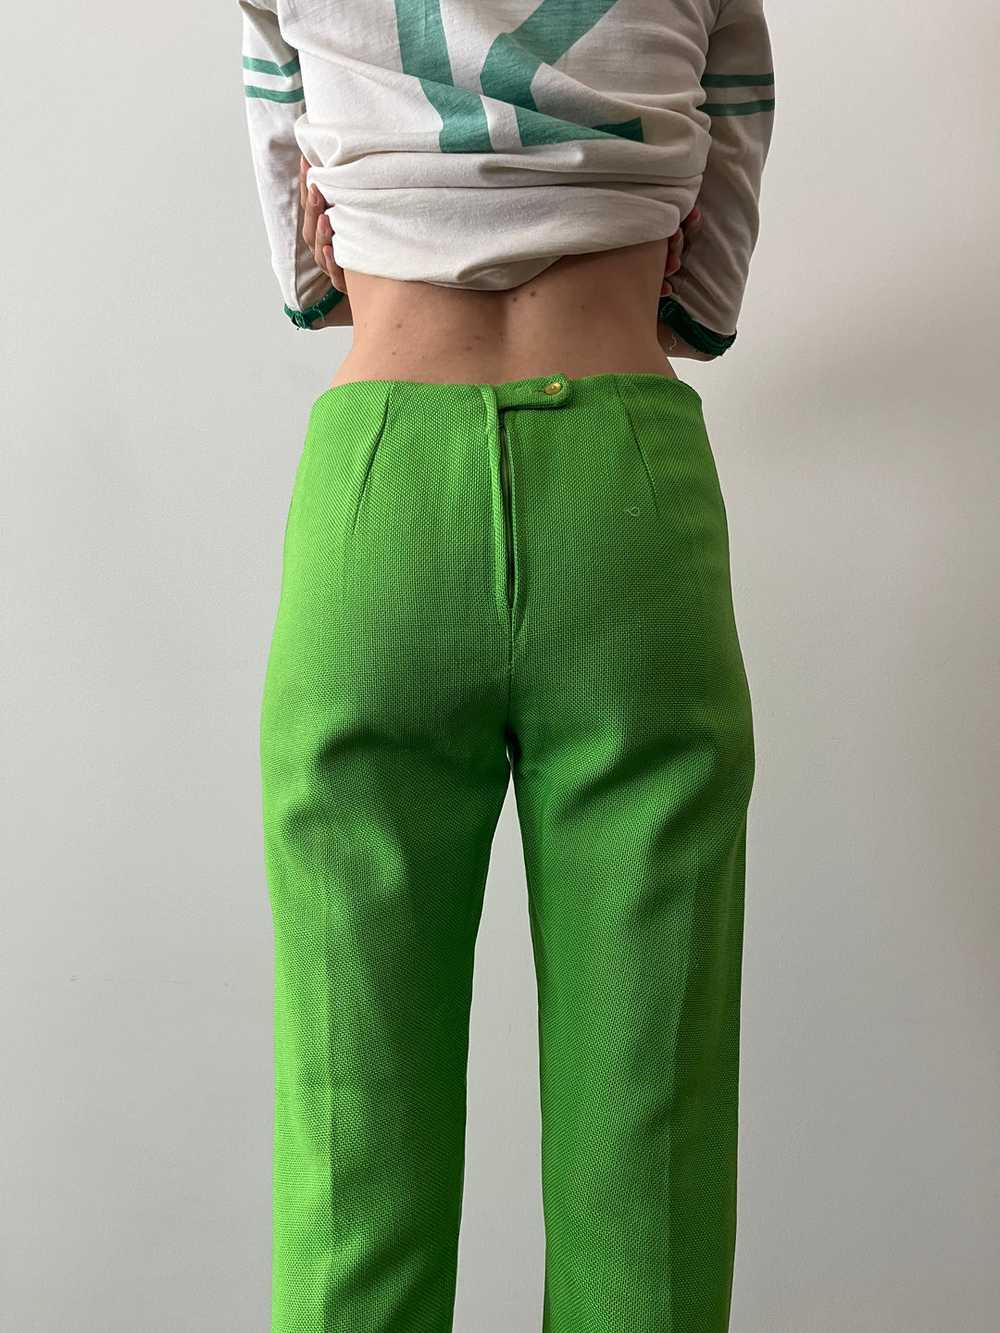 60s/70s Lime Green Woven Linen Pants - image 6